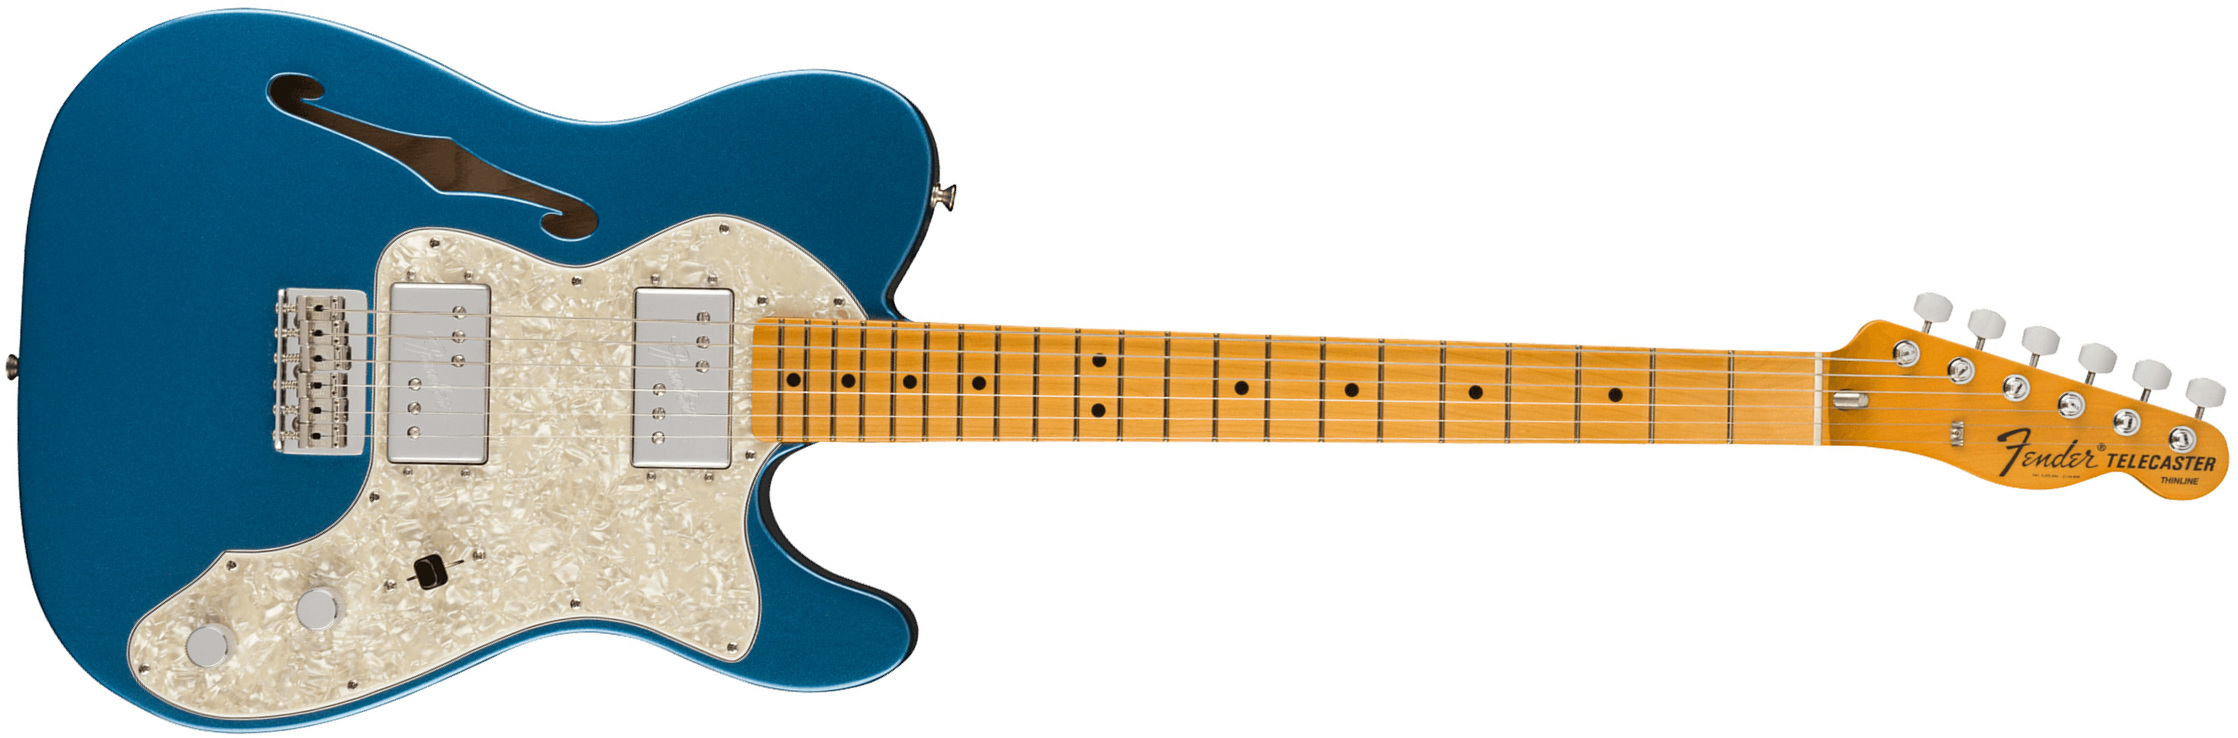 Fender Tele Thinline 1972 American Vintage Ii Usa 2h Ht Mn - Lake Placid Blue - Tel shape electric guitar - Main picture